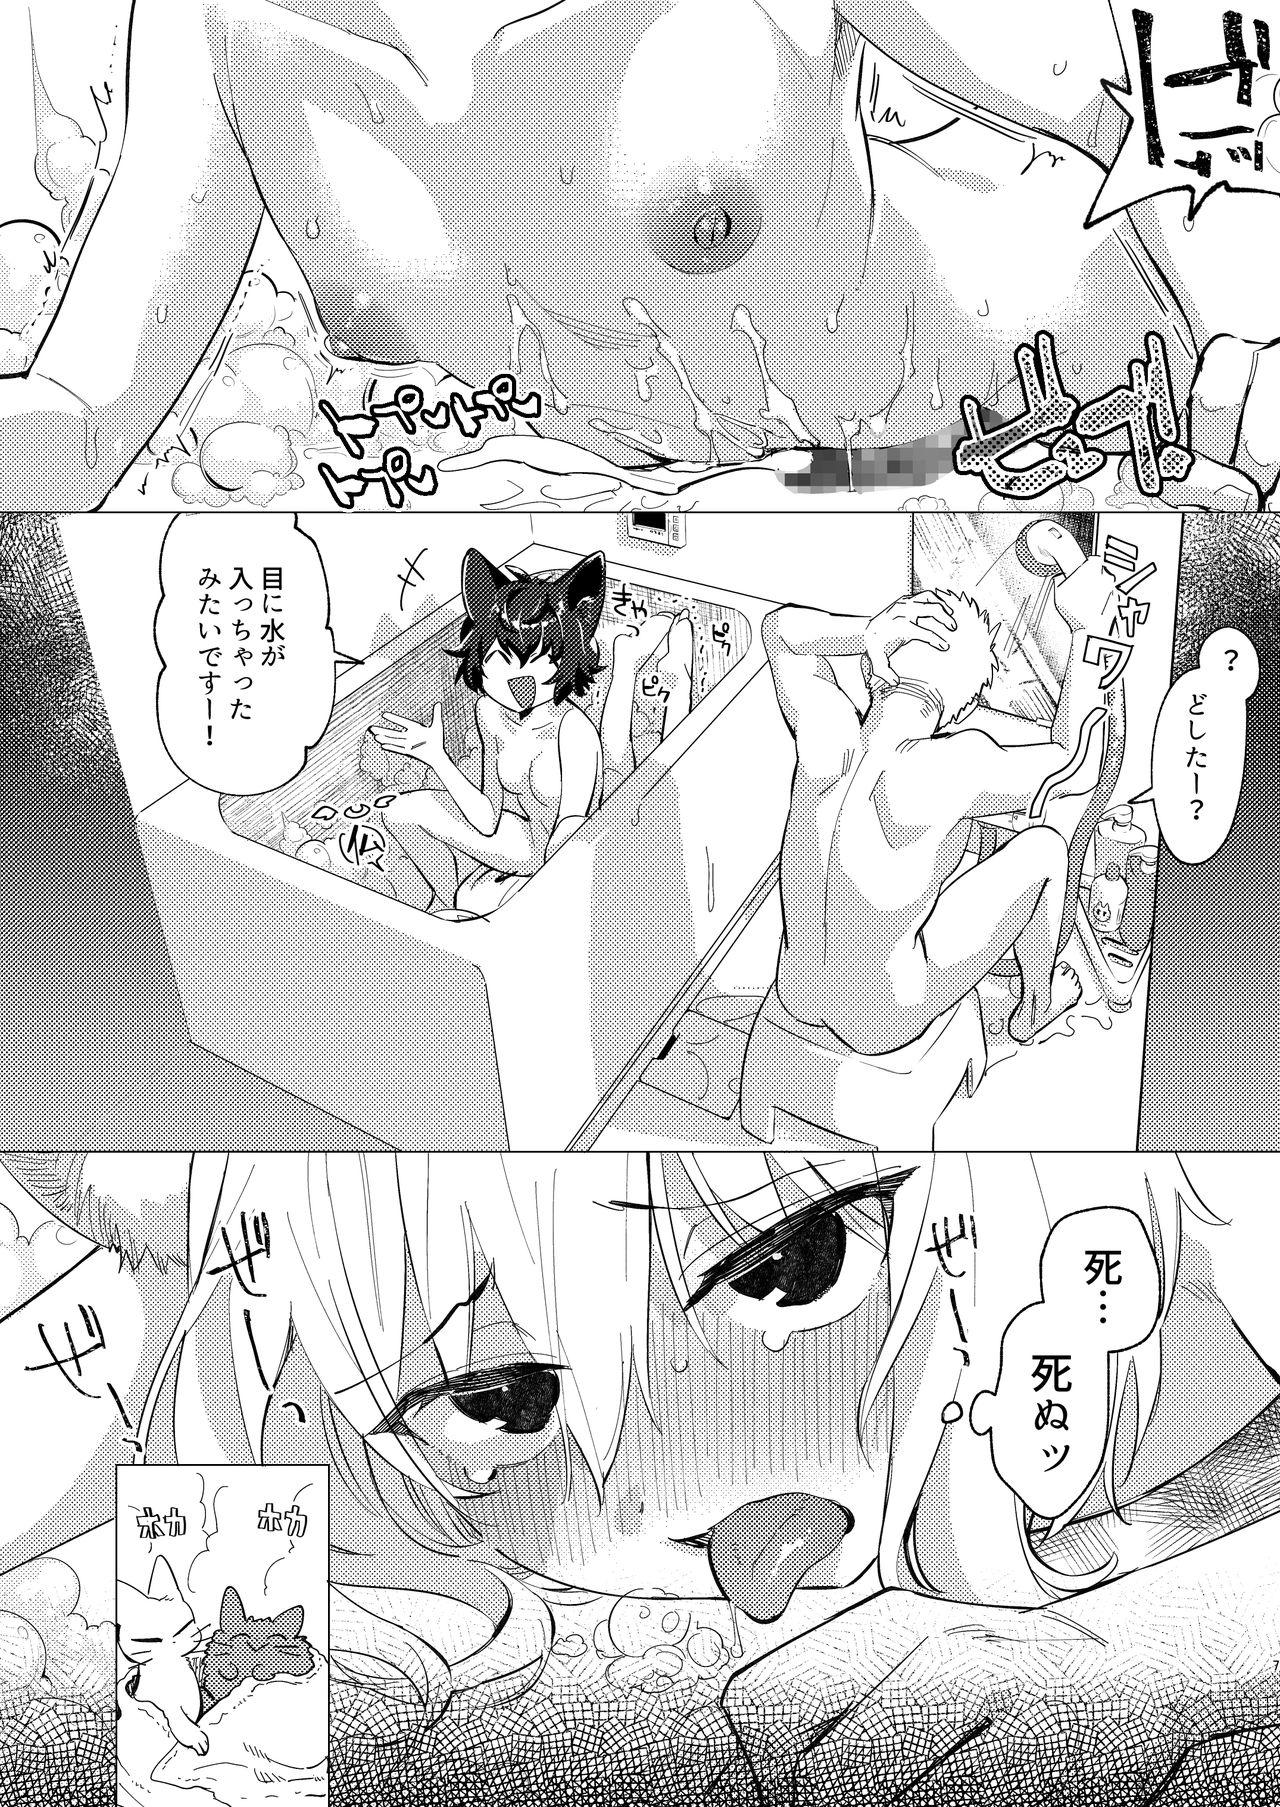 Spooning UR Neko-chans Life Throat - Page 5